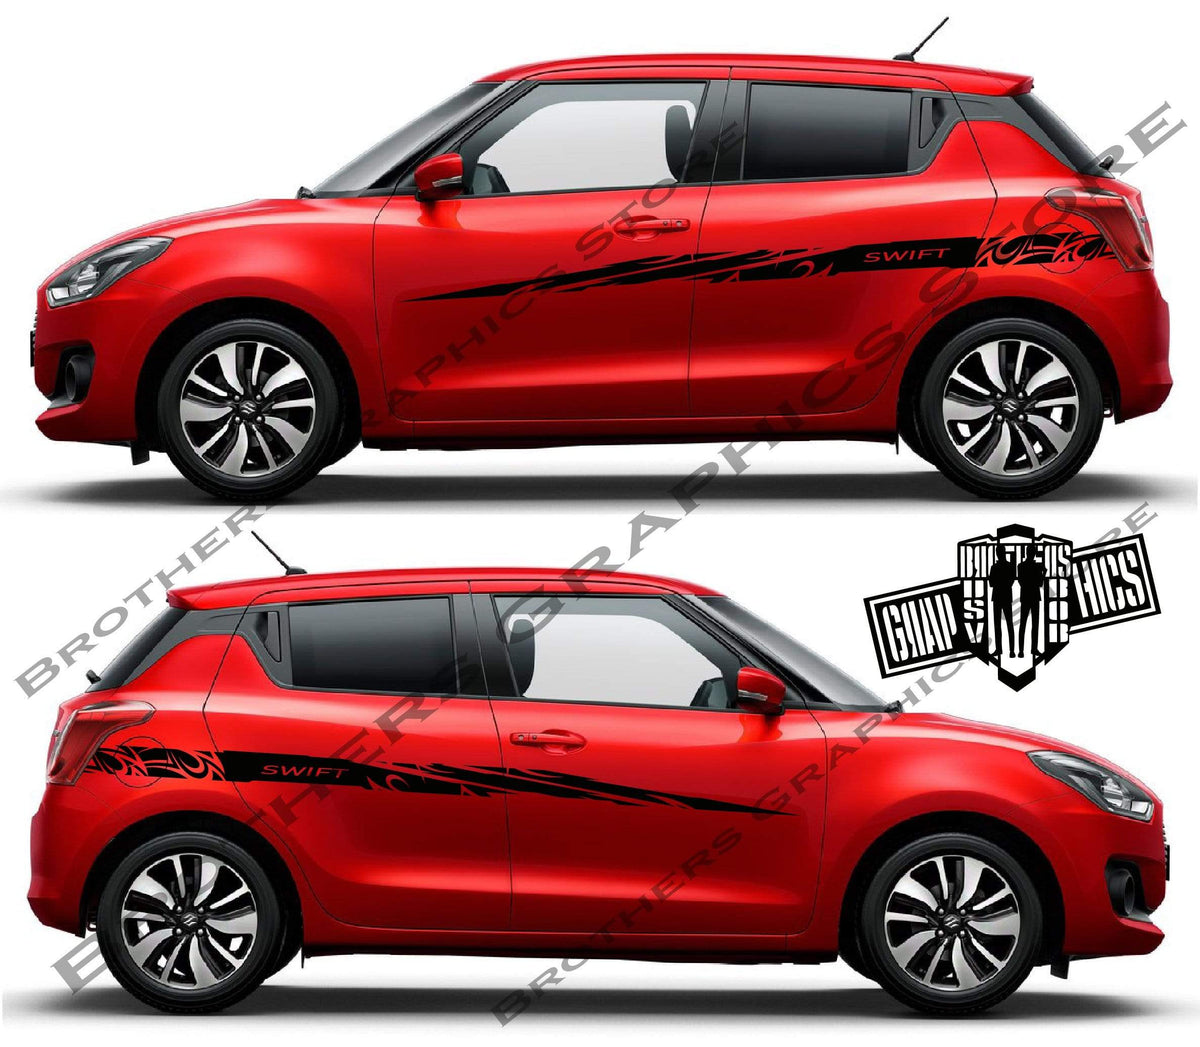 Suzuki Swift - Red Block Striping  Suzuki swift, Suzuki, Car projects